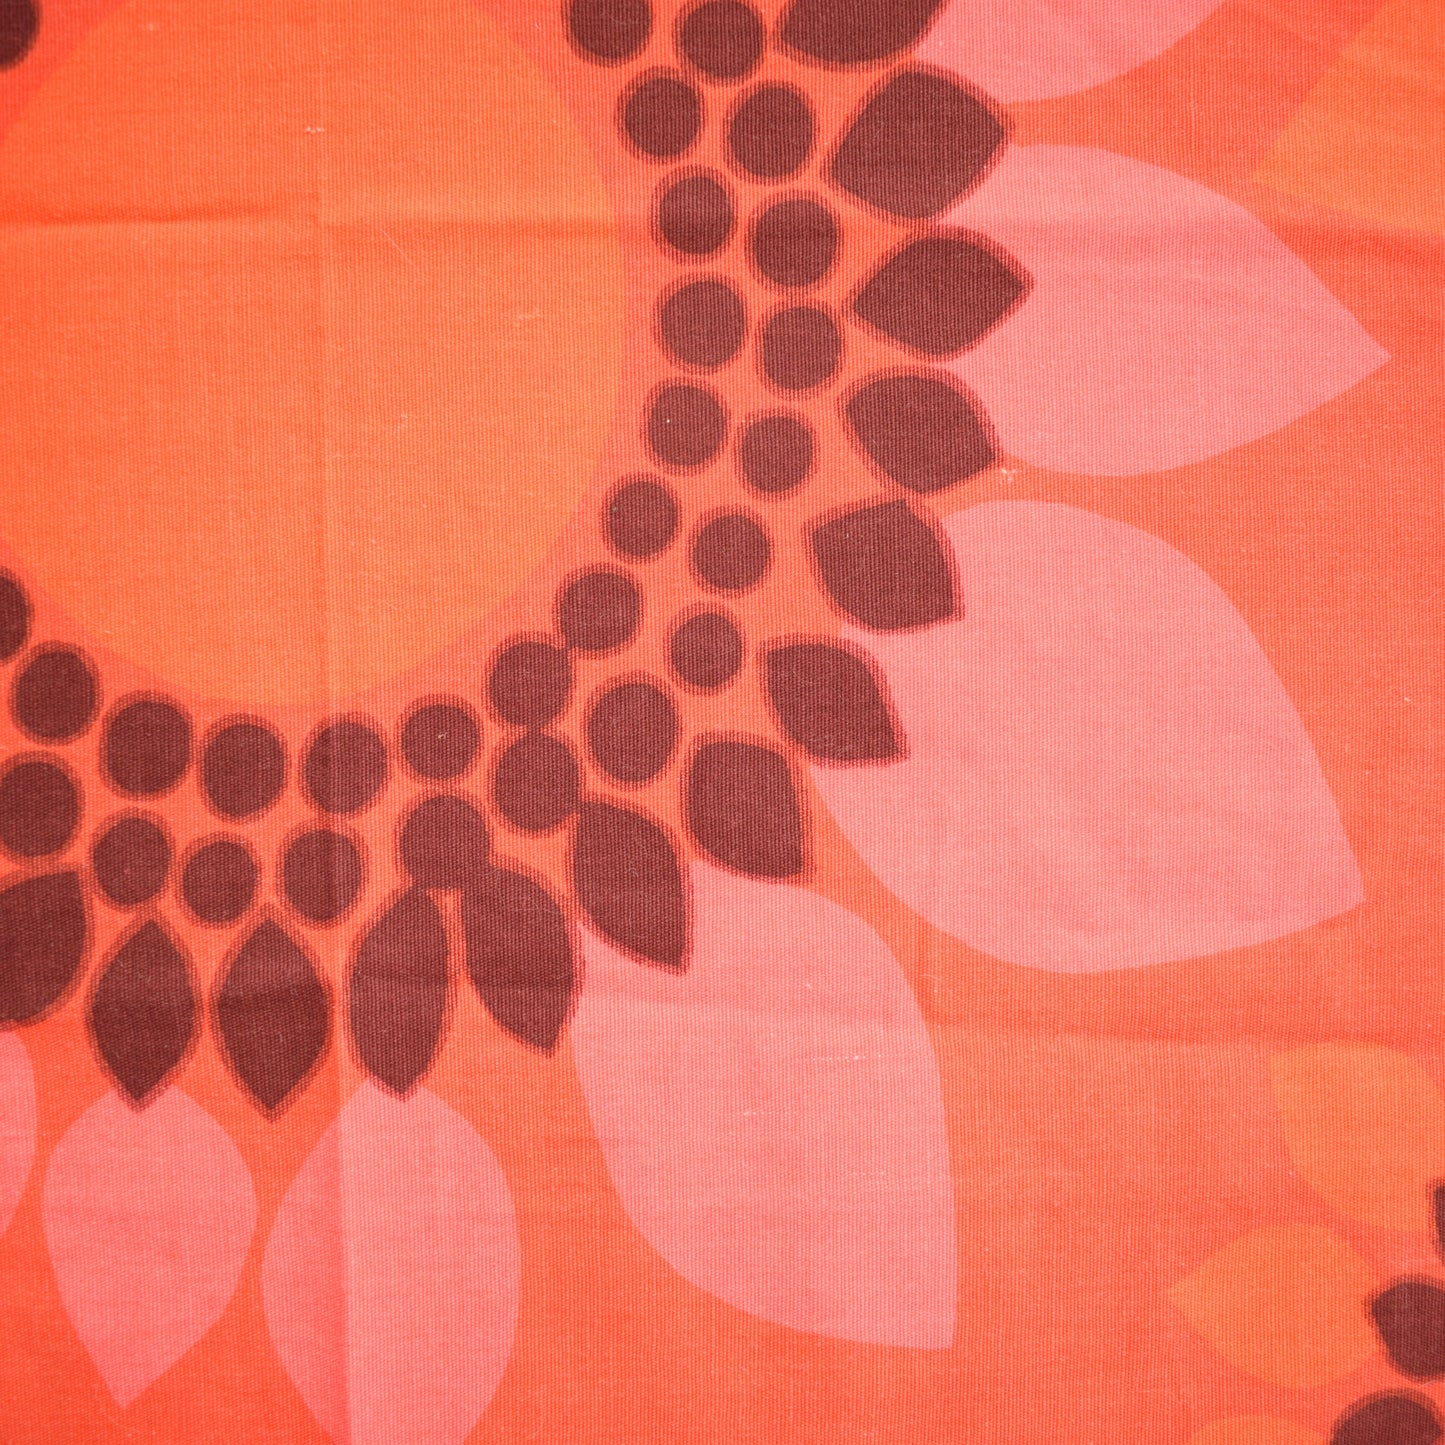 Vintage 1960s Boras Swedish Fabric / Tablecloth